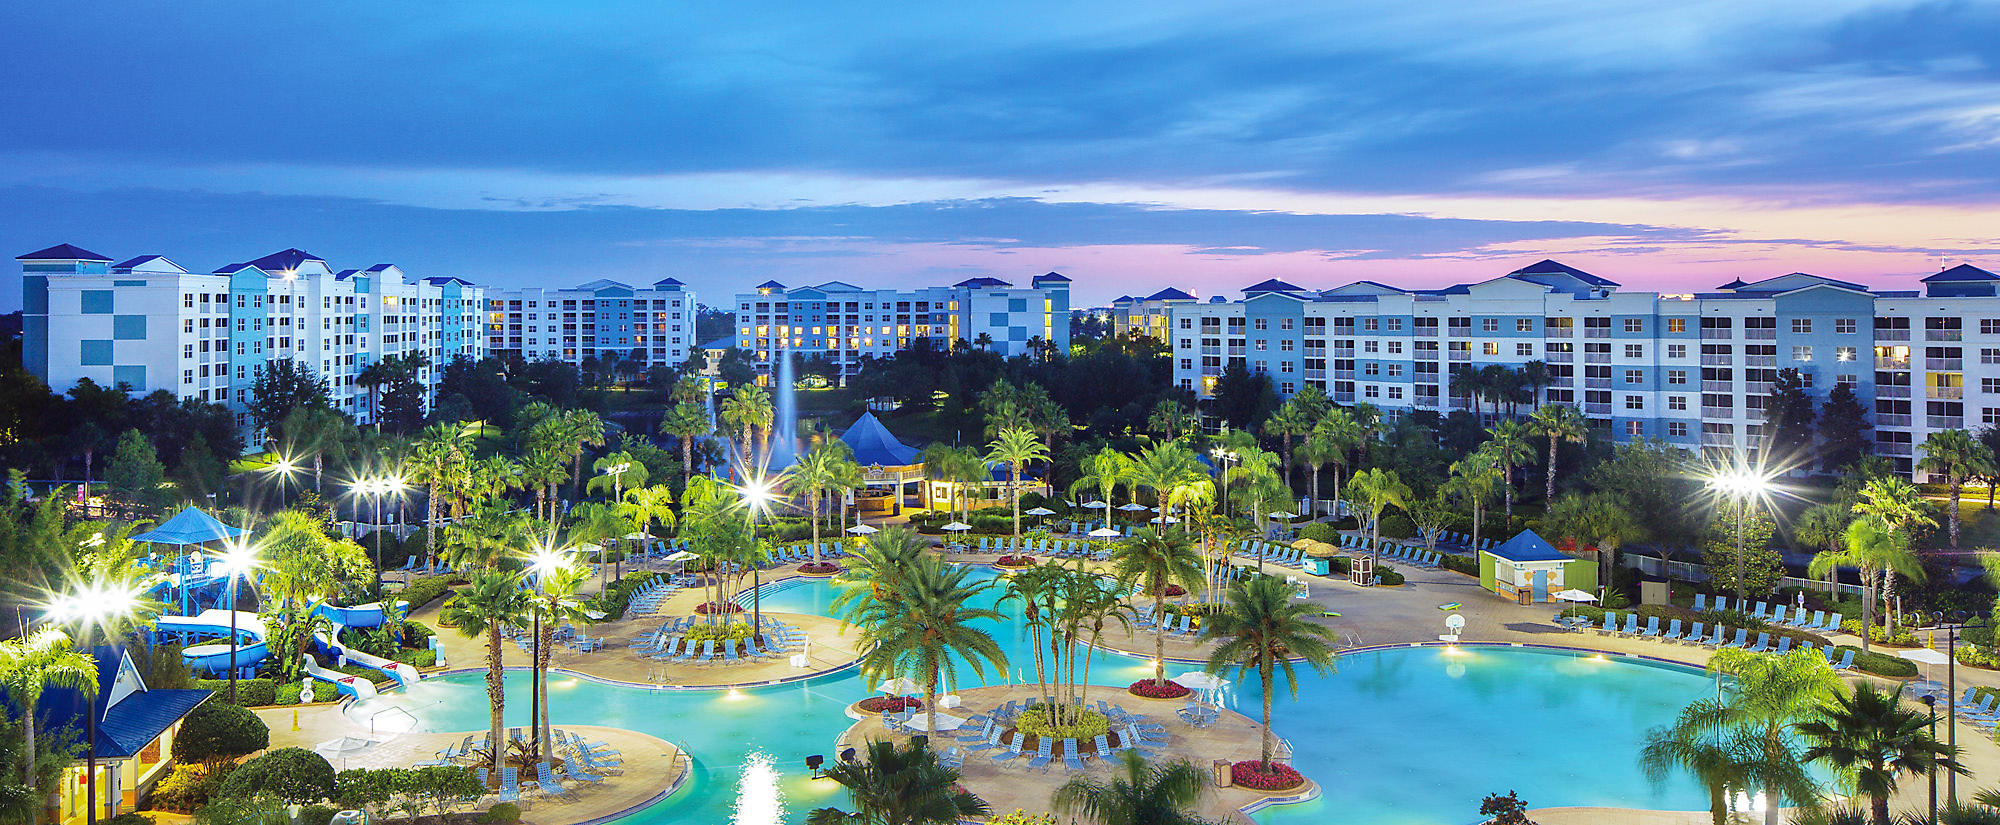 The Fountains Resort  Orlando Florida  Bluegreen Vacations